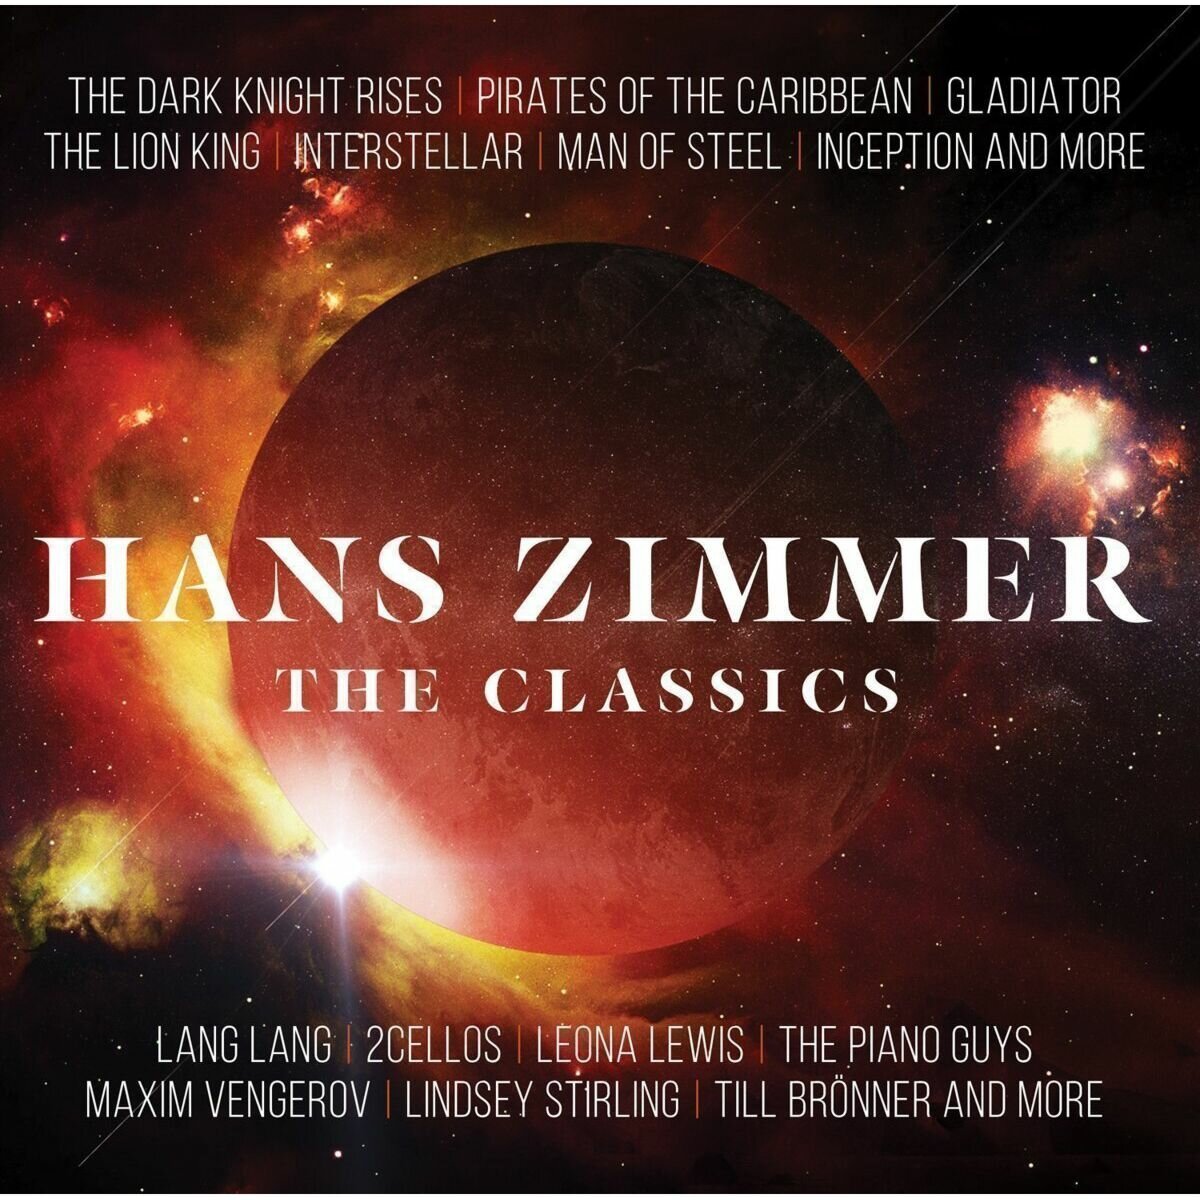 Виниловая пластинка Warner Music Hans Zimmer - The Classics (2LP)